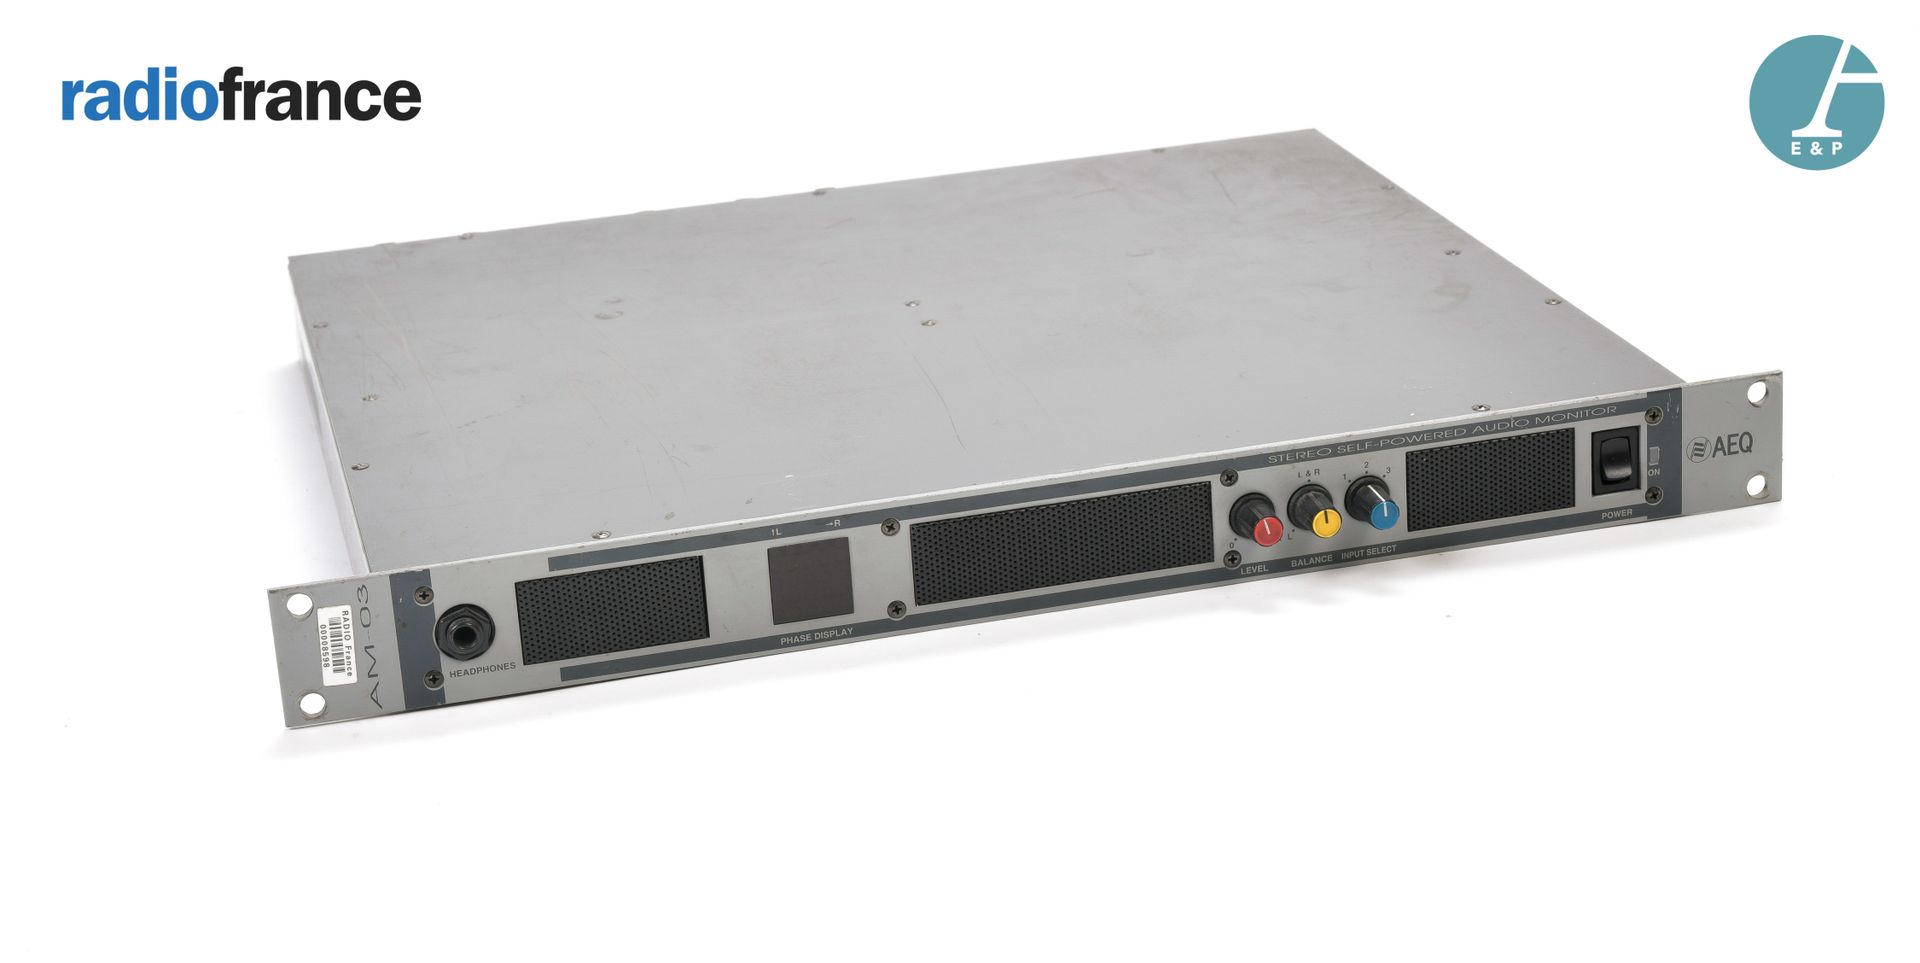 Null AEQ，立体声自供电音频监控器，AM03。

高：4,5厘米 - 宽：48,2厘米 - 深：39厘米

该设备处于使用状态，不保证其功能。